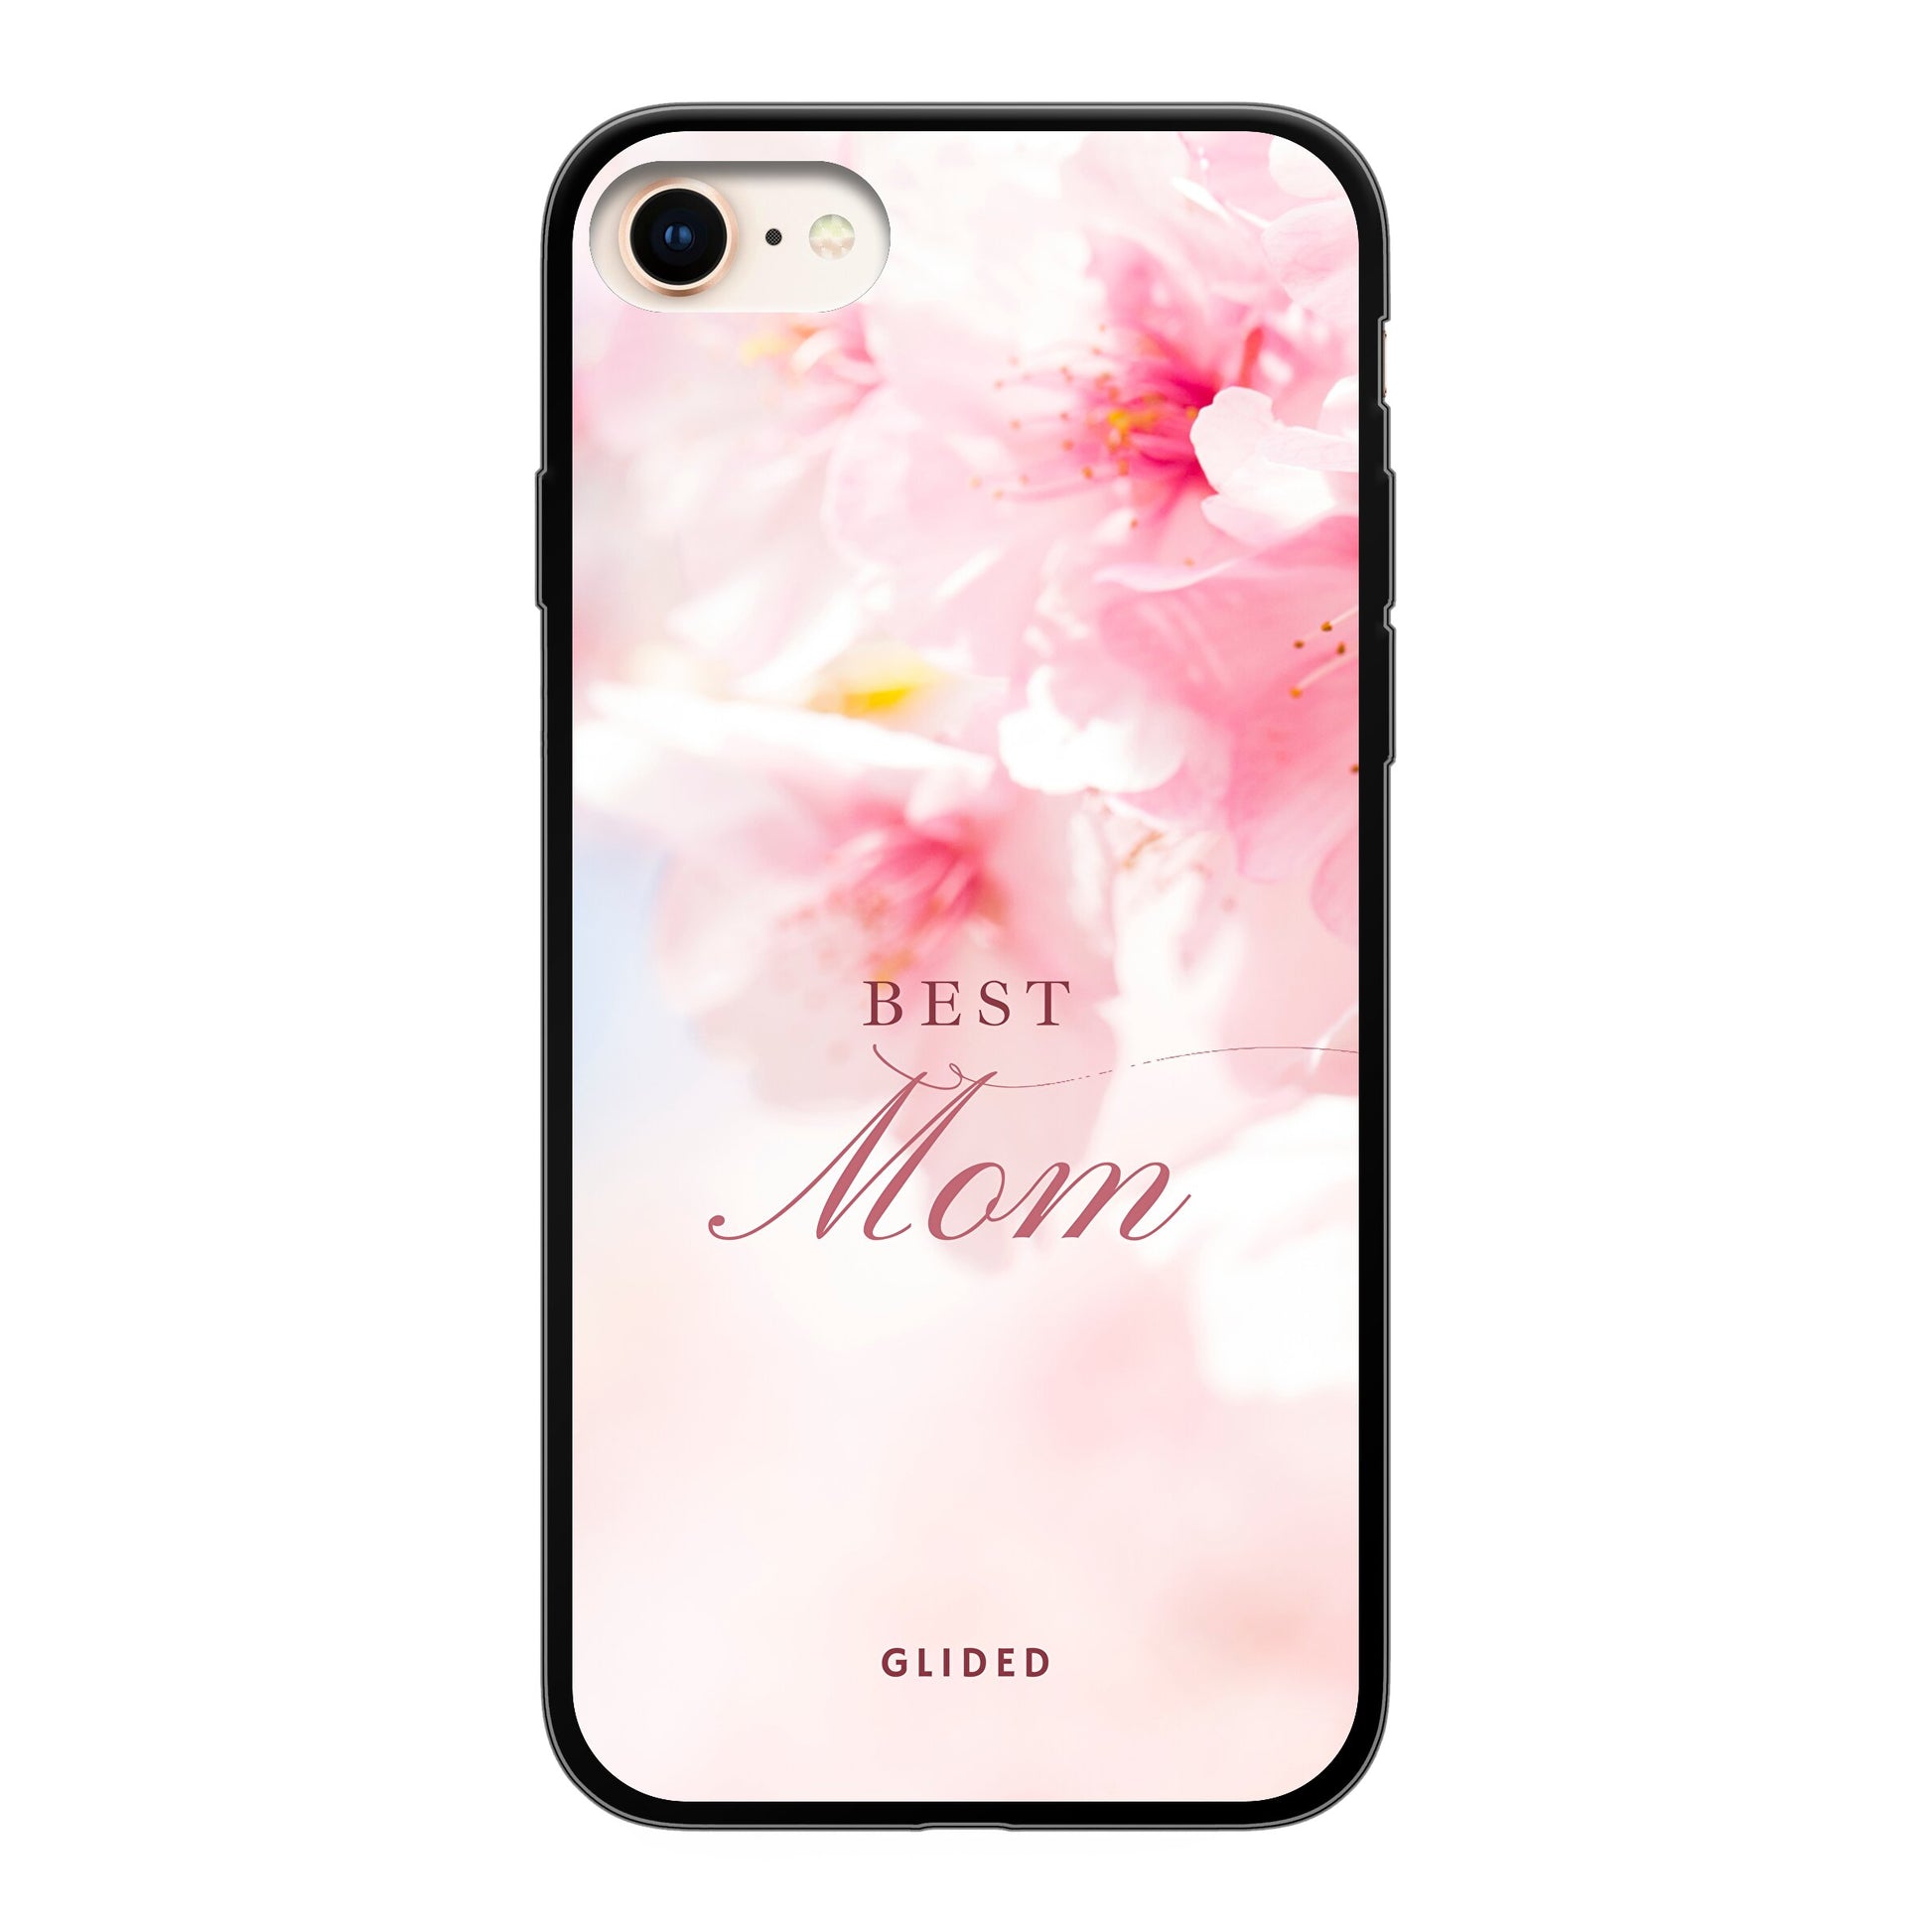 Flower Power - iPhone 7 - Soft case